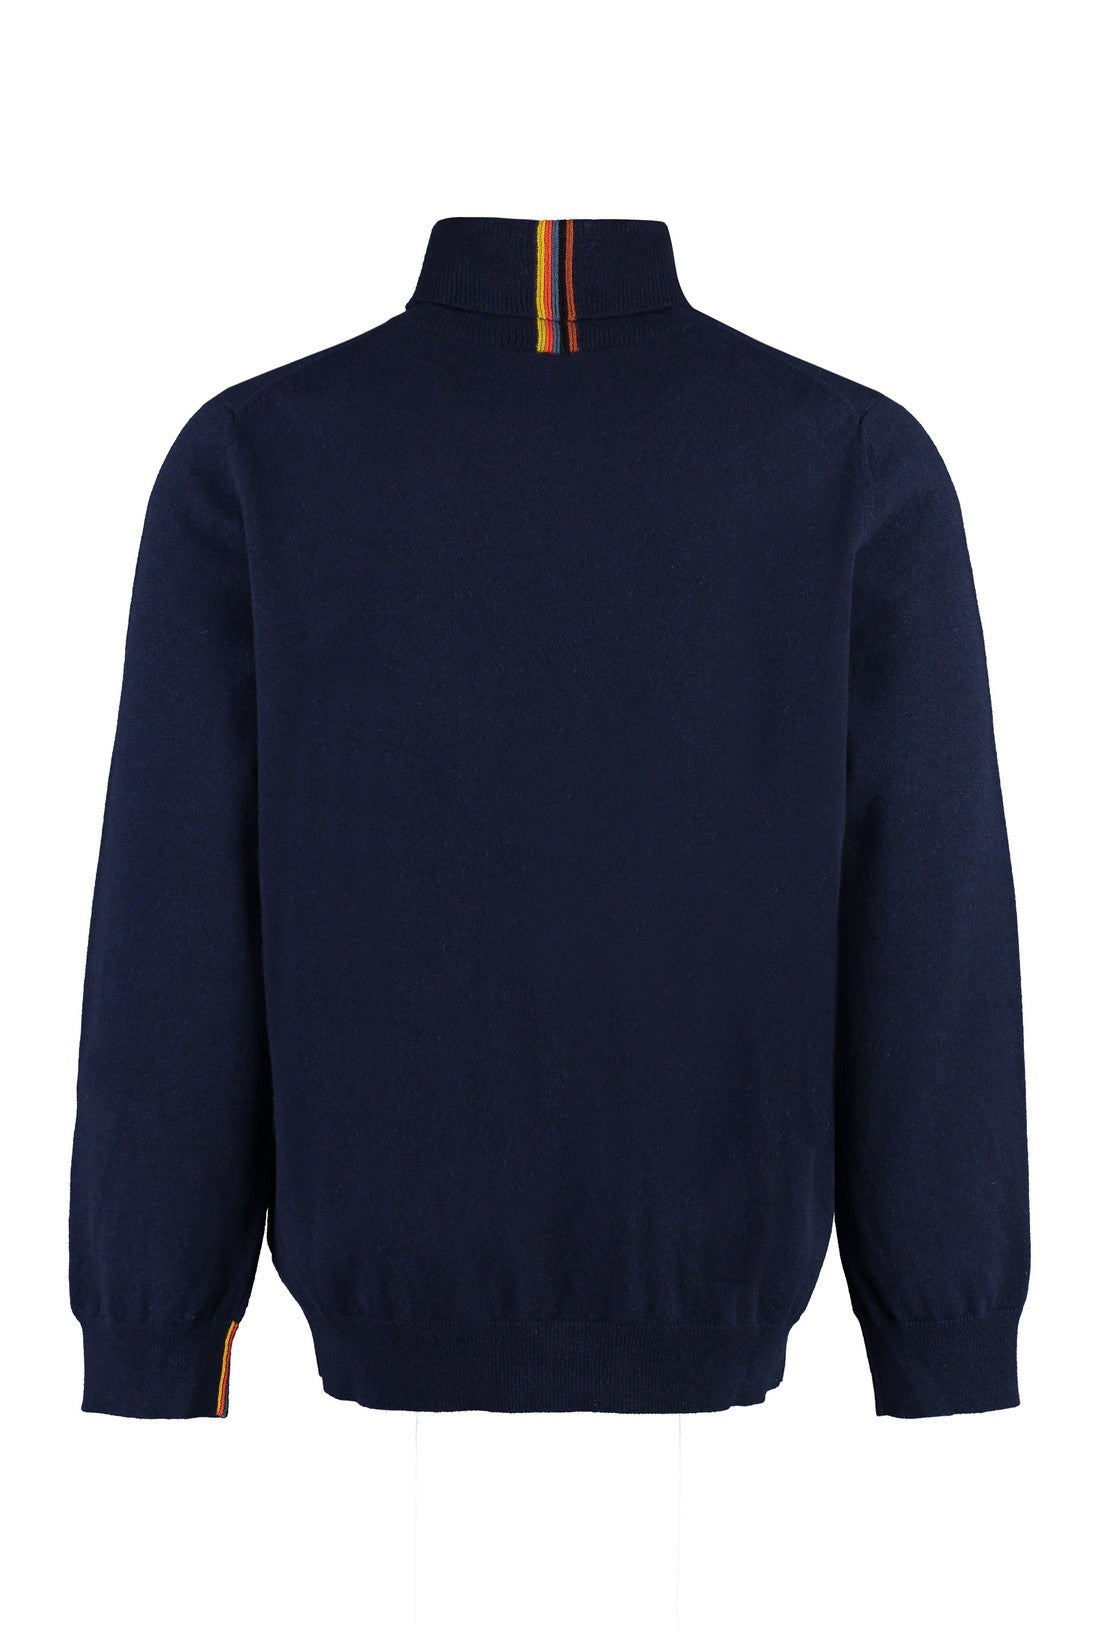 Paul Smith-OUTLET-SALE-Cashmere turtleneck sweater-ARCHIVIST